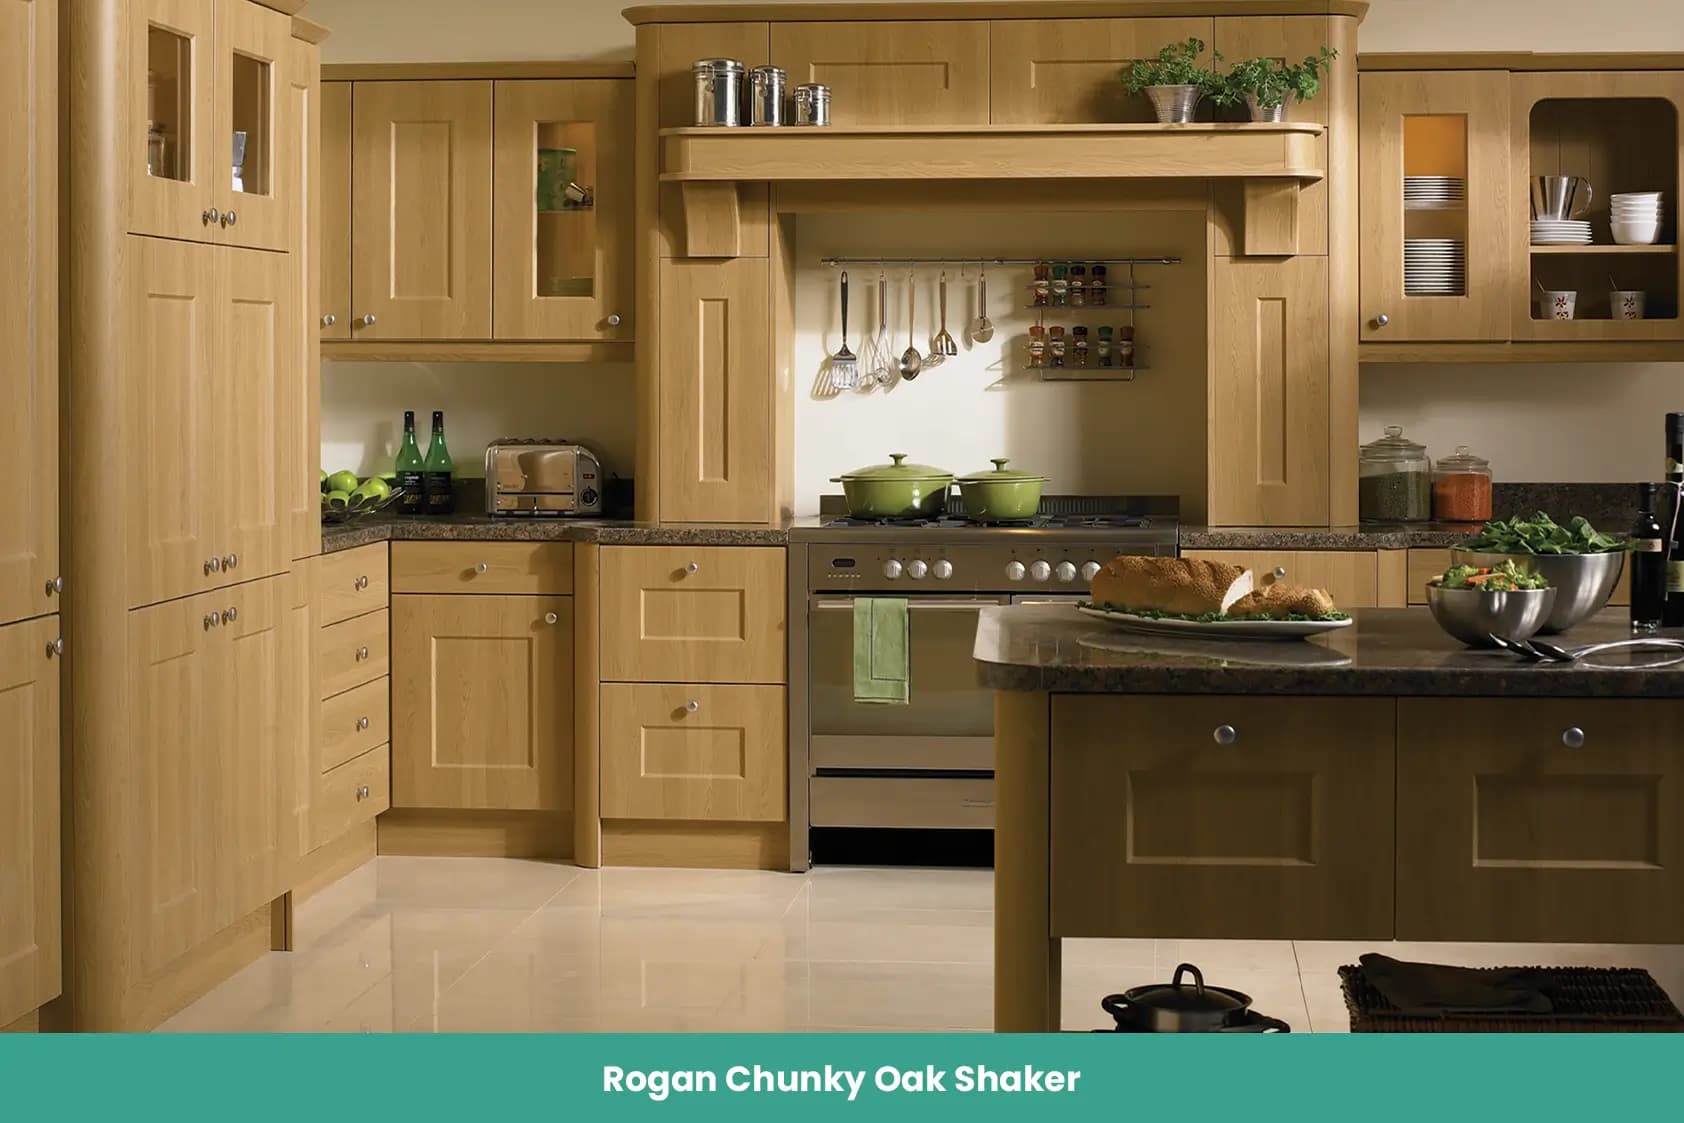 Rogan Chunky Oak Shaker Kitchen